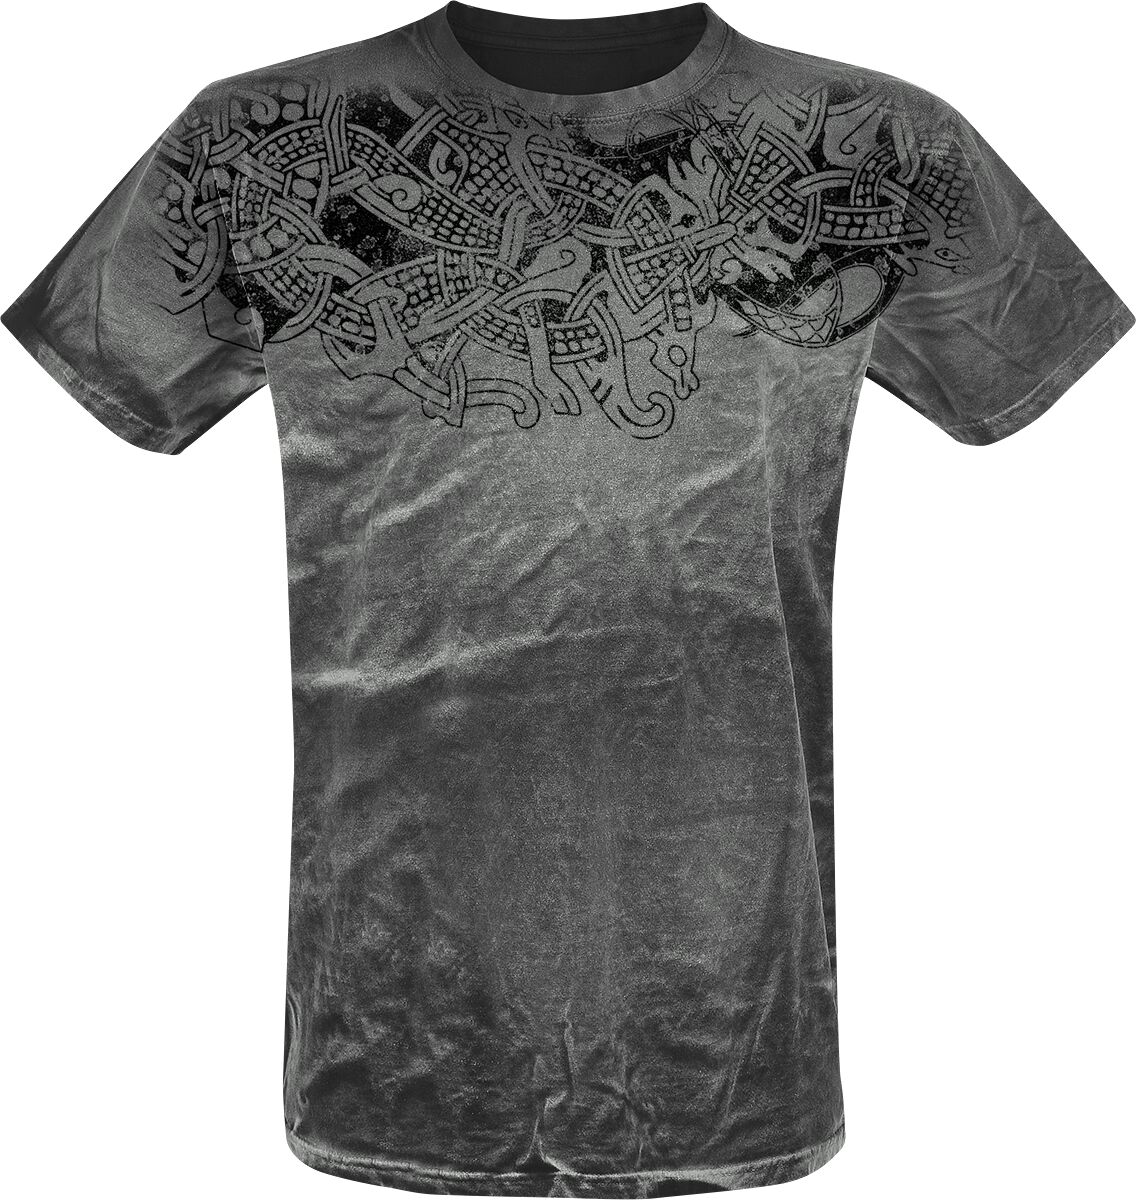 Outer Vision T-Shirt - Thunderstorm - S bis 3XL - für Männer - Größe XXL - grau